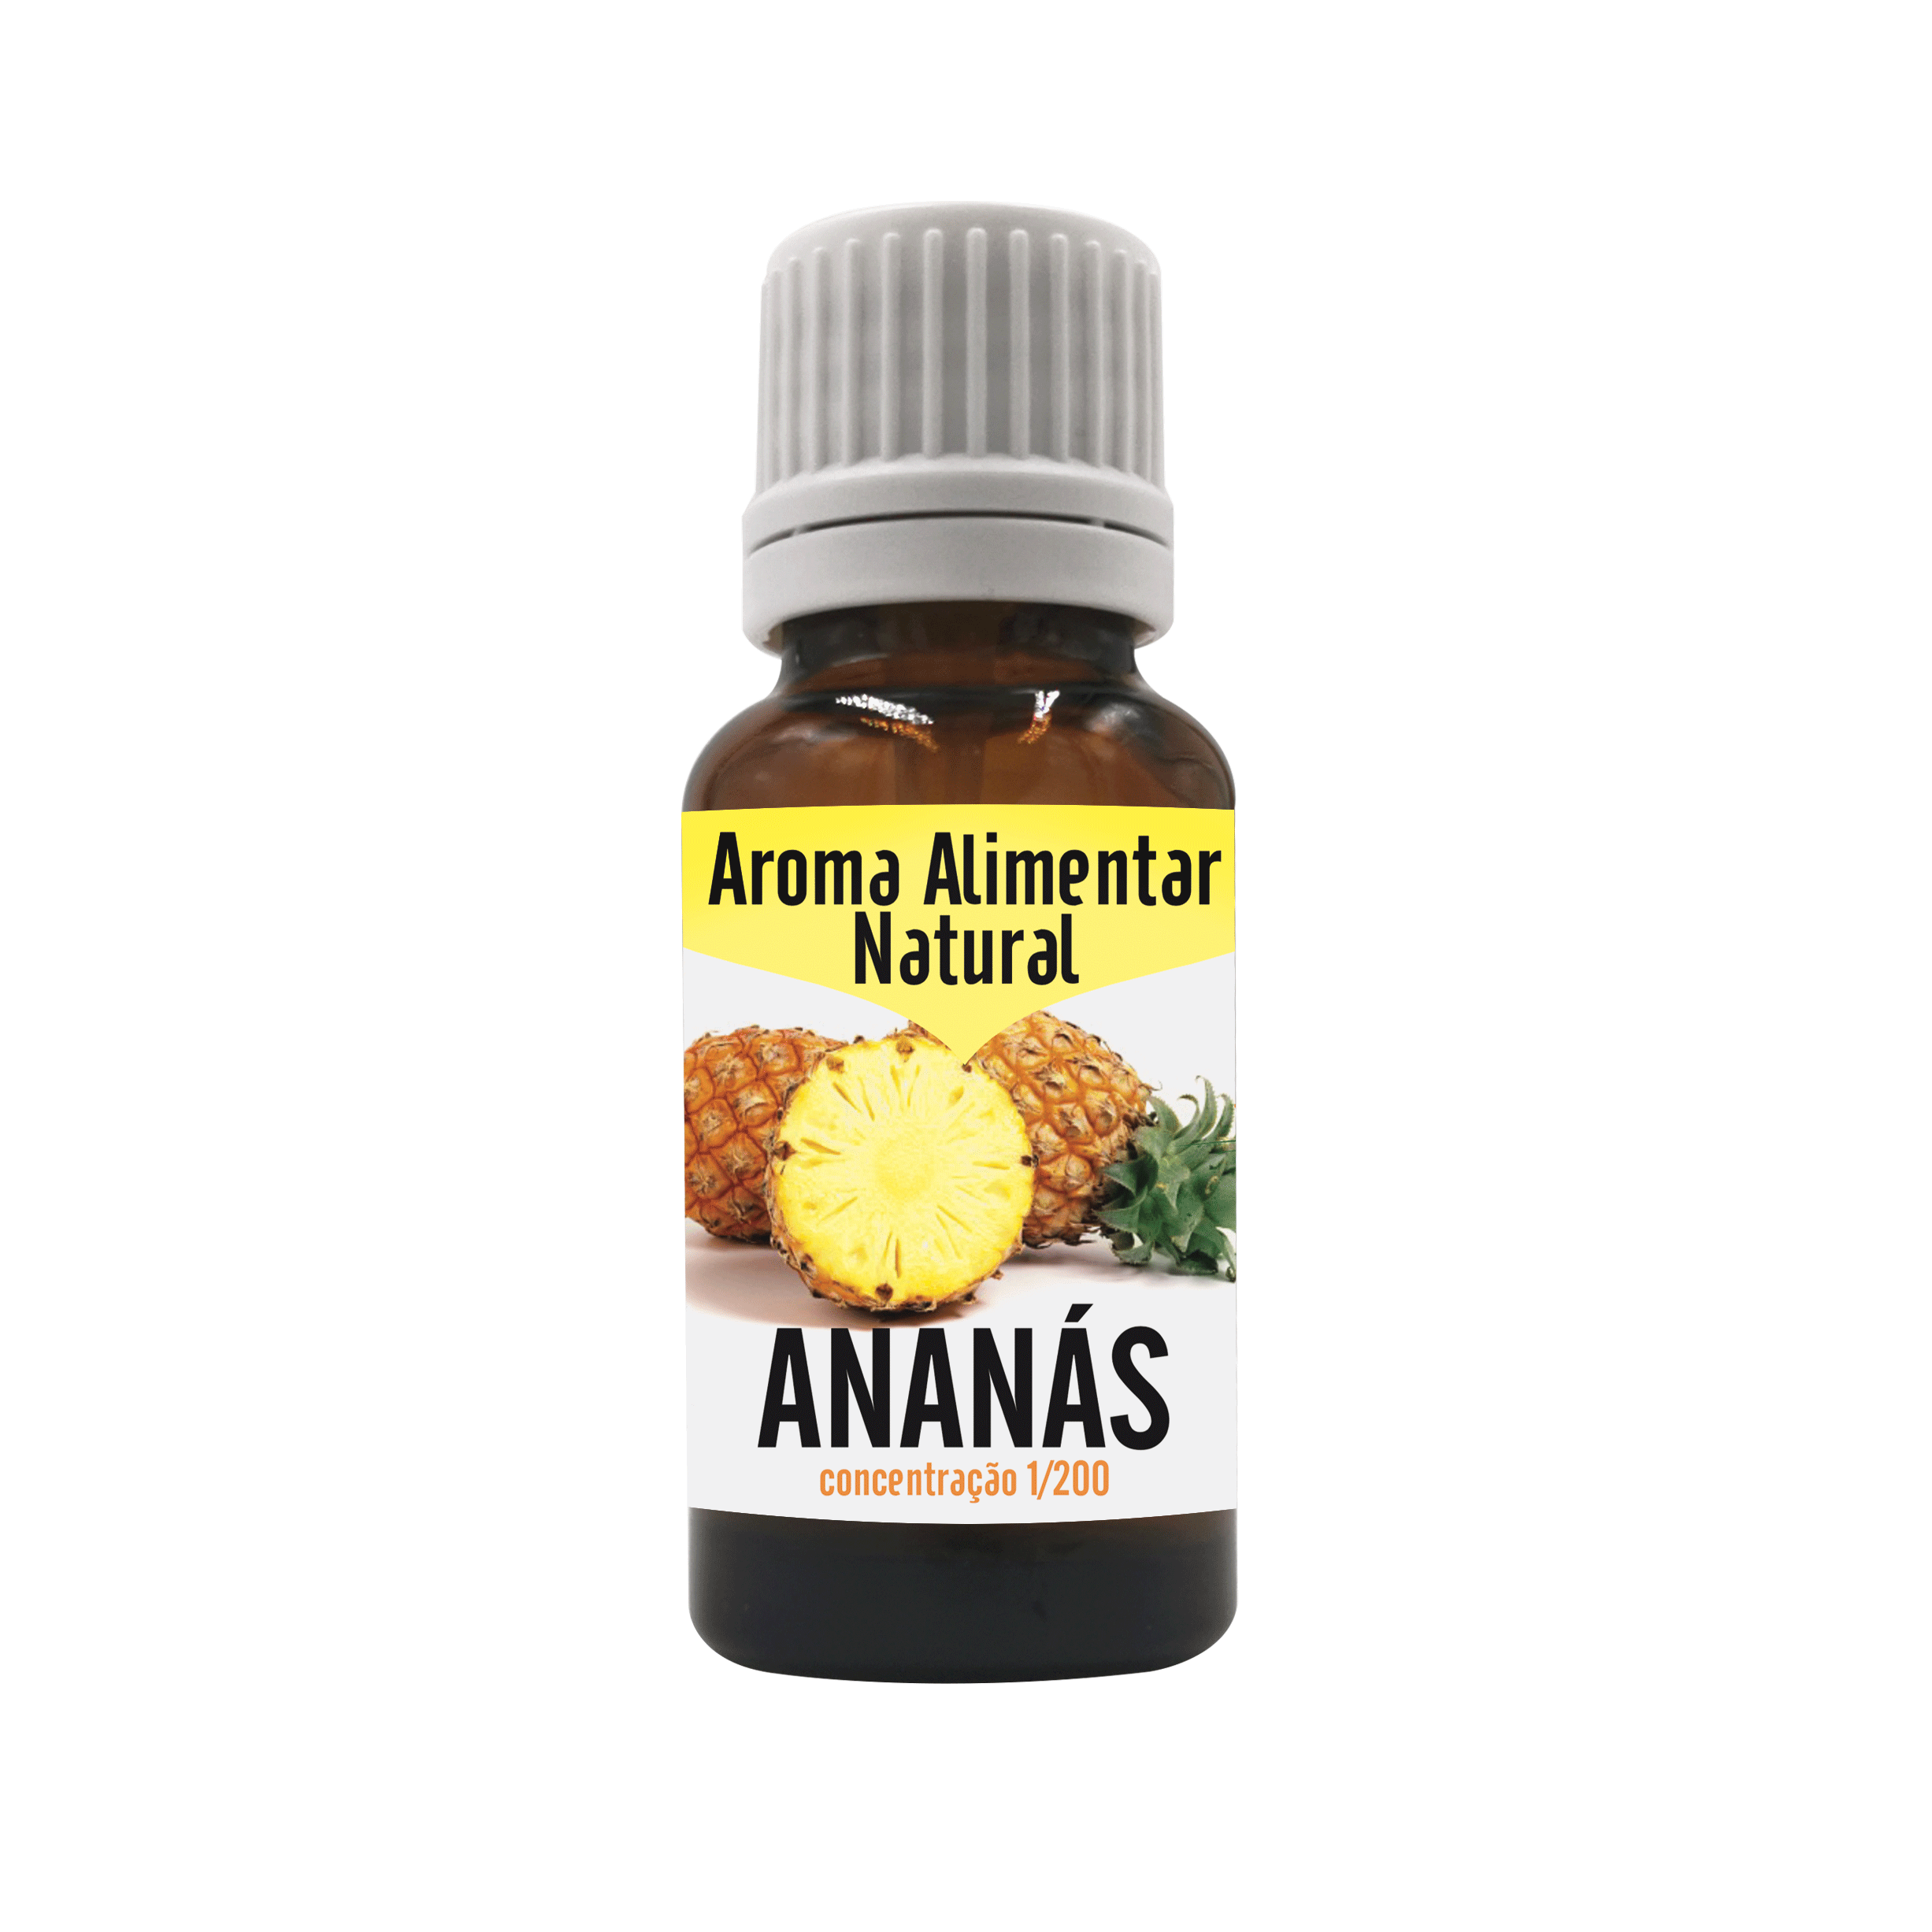 Aroma Alimentar de Ananás